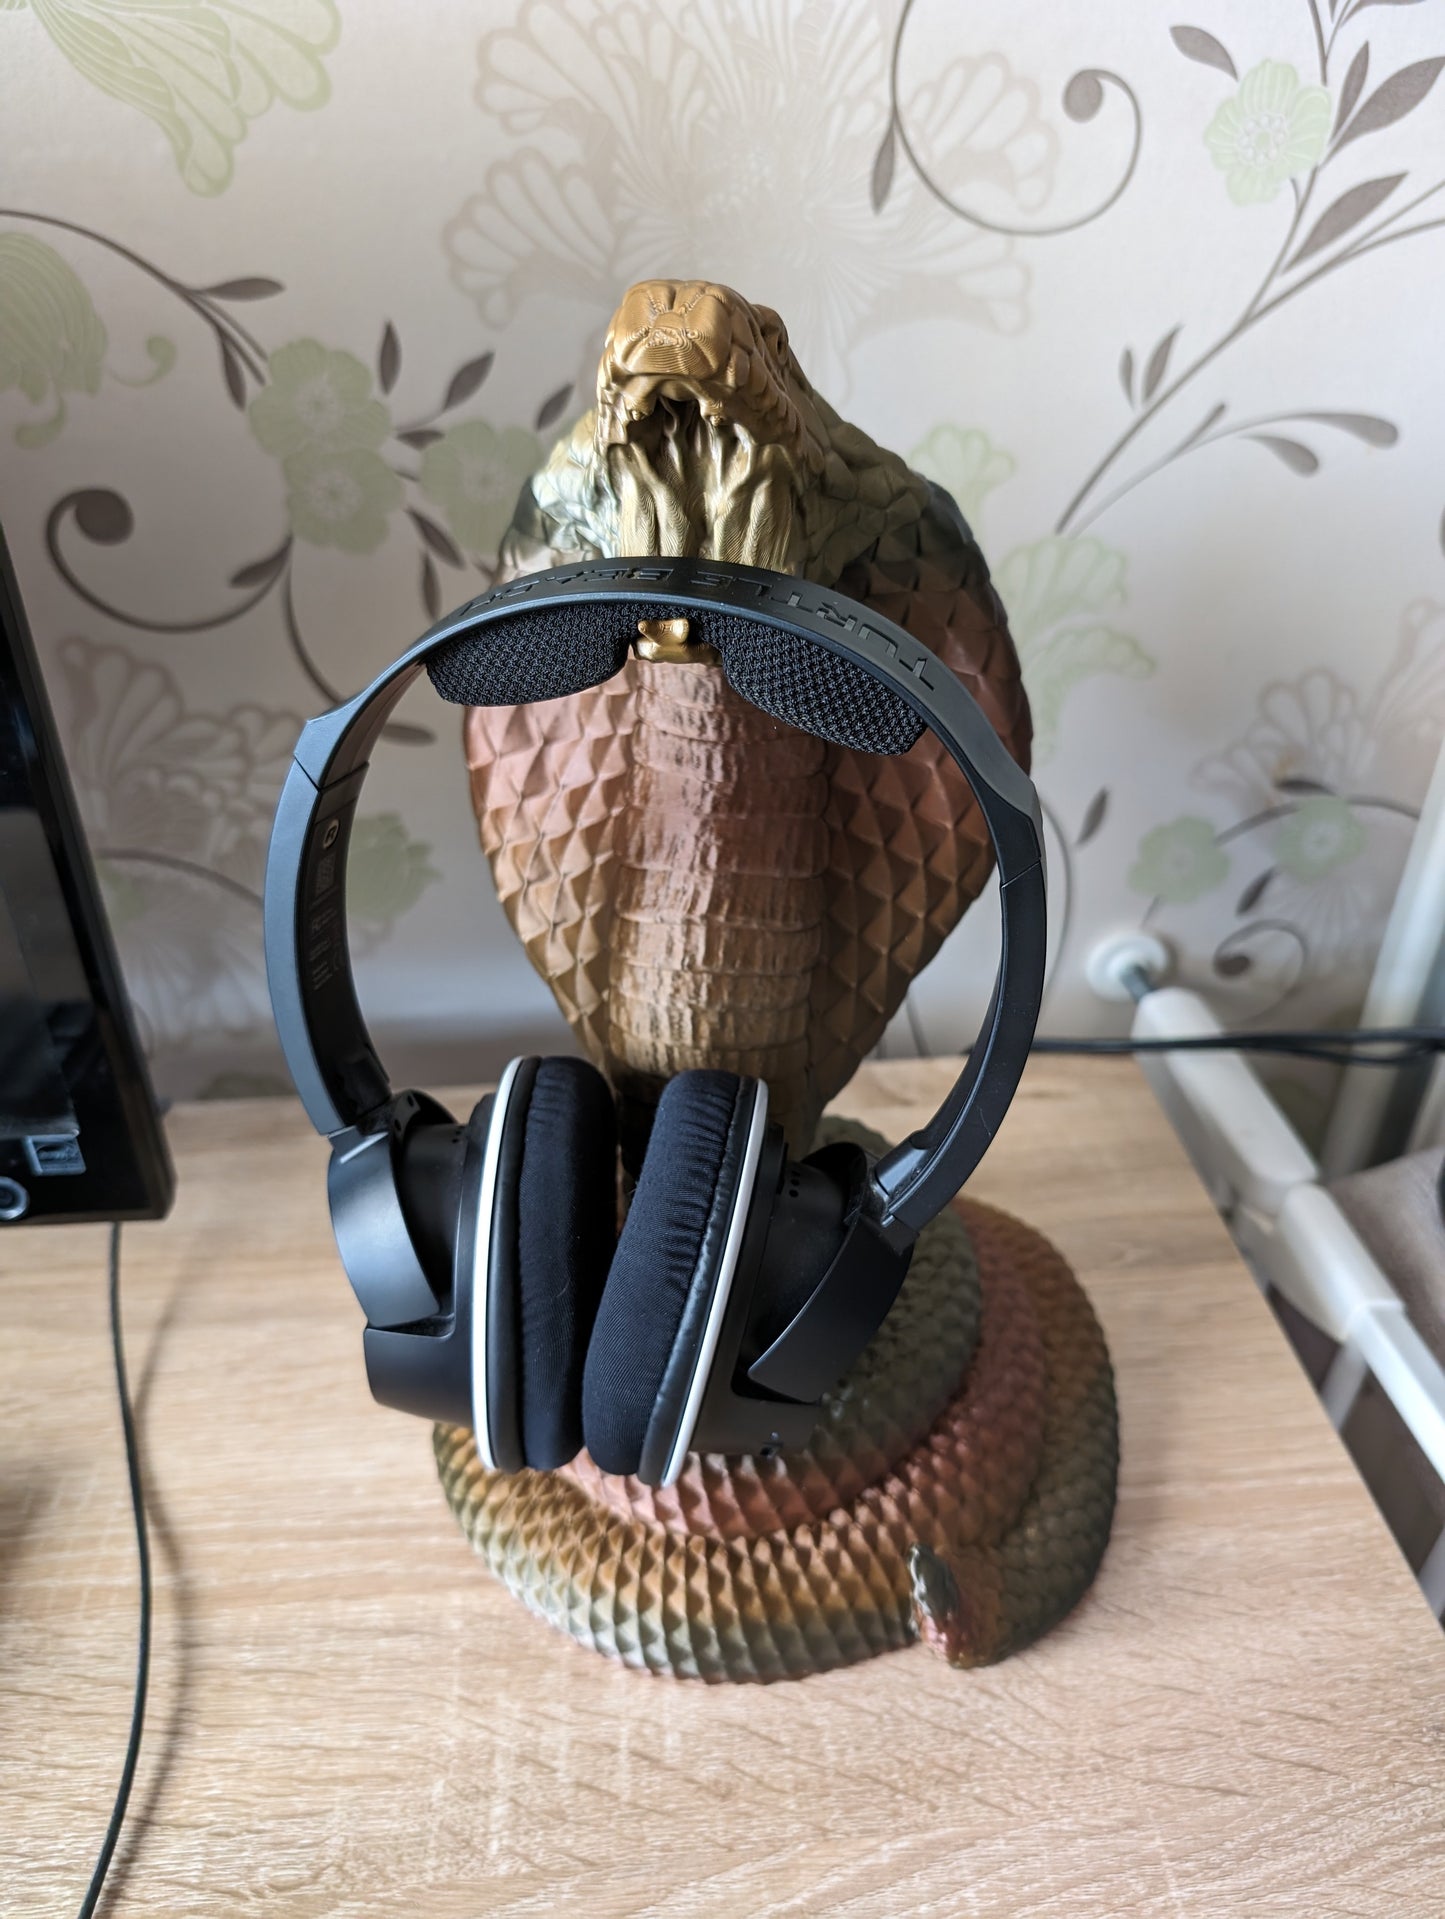 Cobra snake headphone holder on desk from a front angle